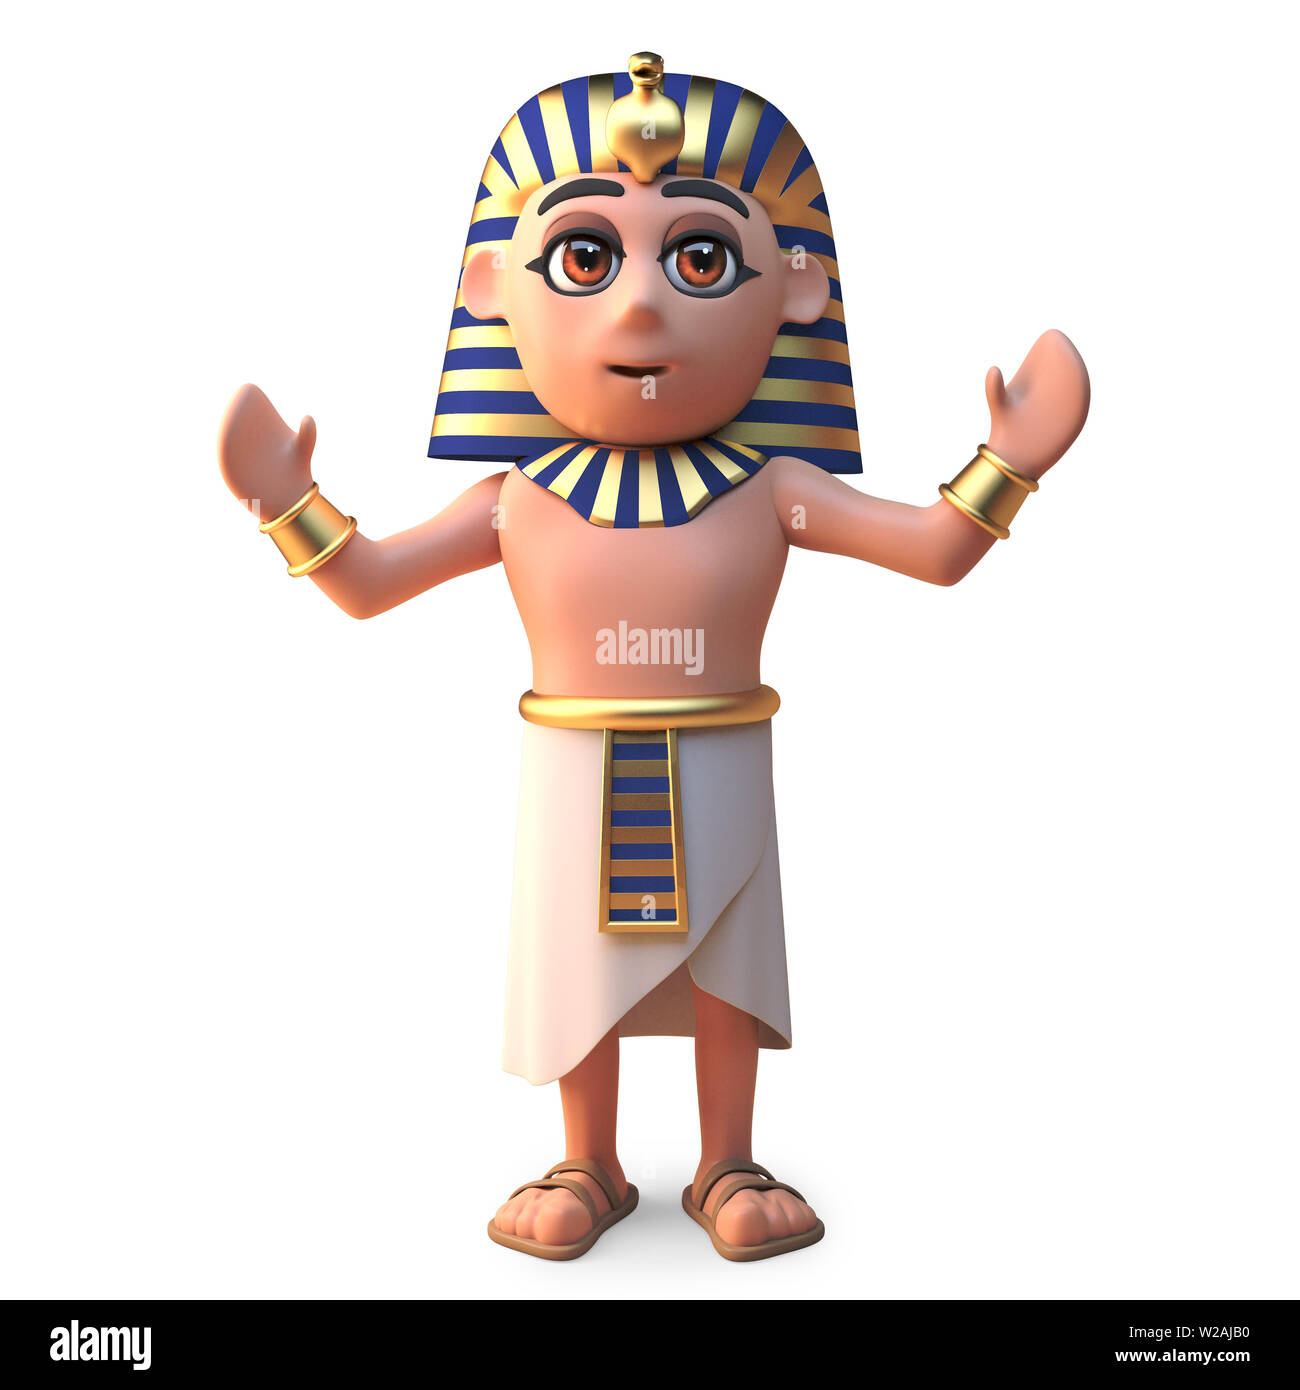 Tutankhamun Cut Out Stock Images & Pictures - Alamy